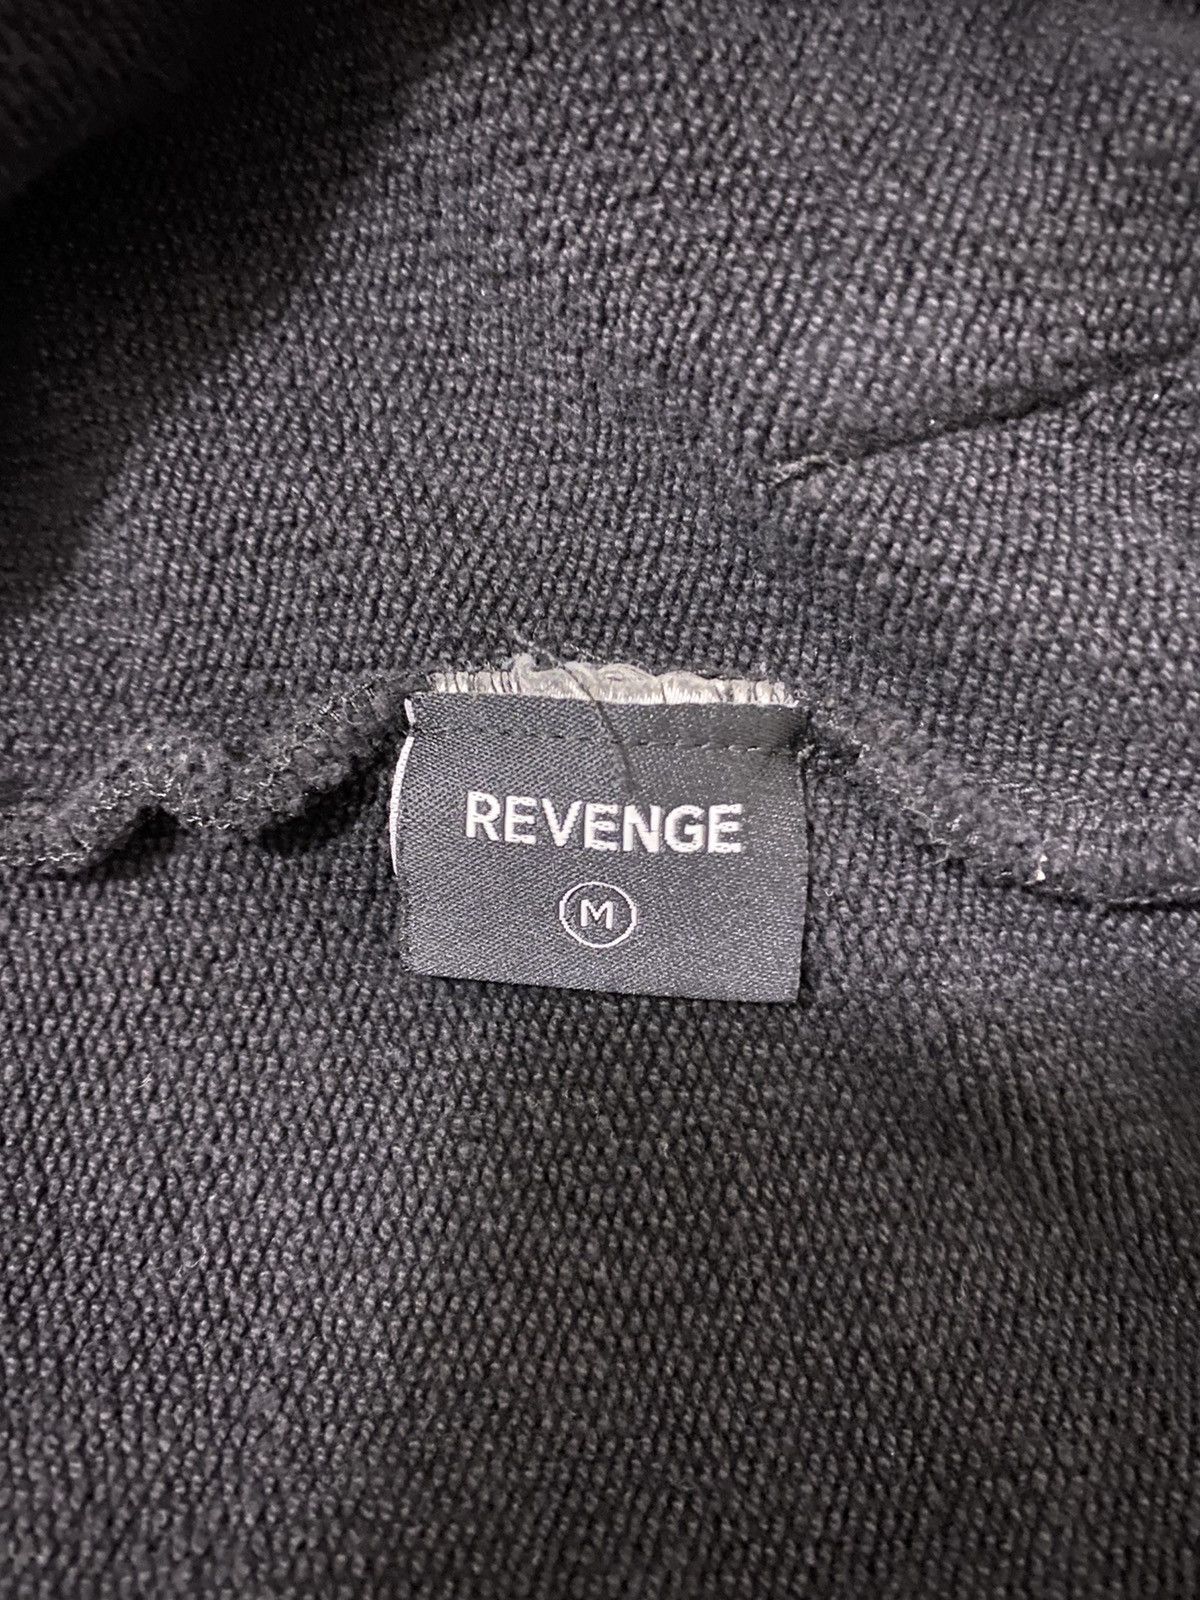 Revenge Revenge - Rainbow Rhinestone Skull Hoodie Size US M / EU 48-50 / 2 - 5 Thumbnail